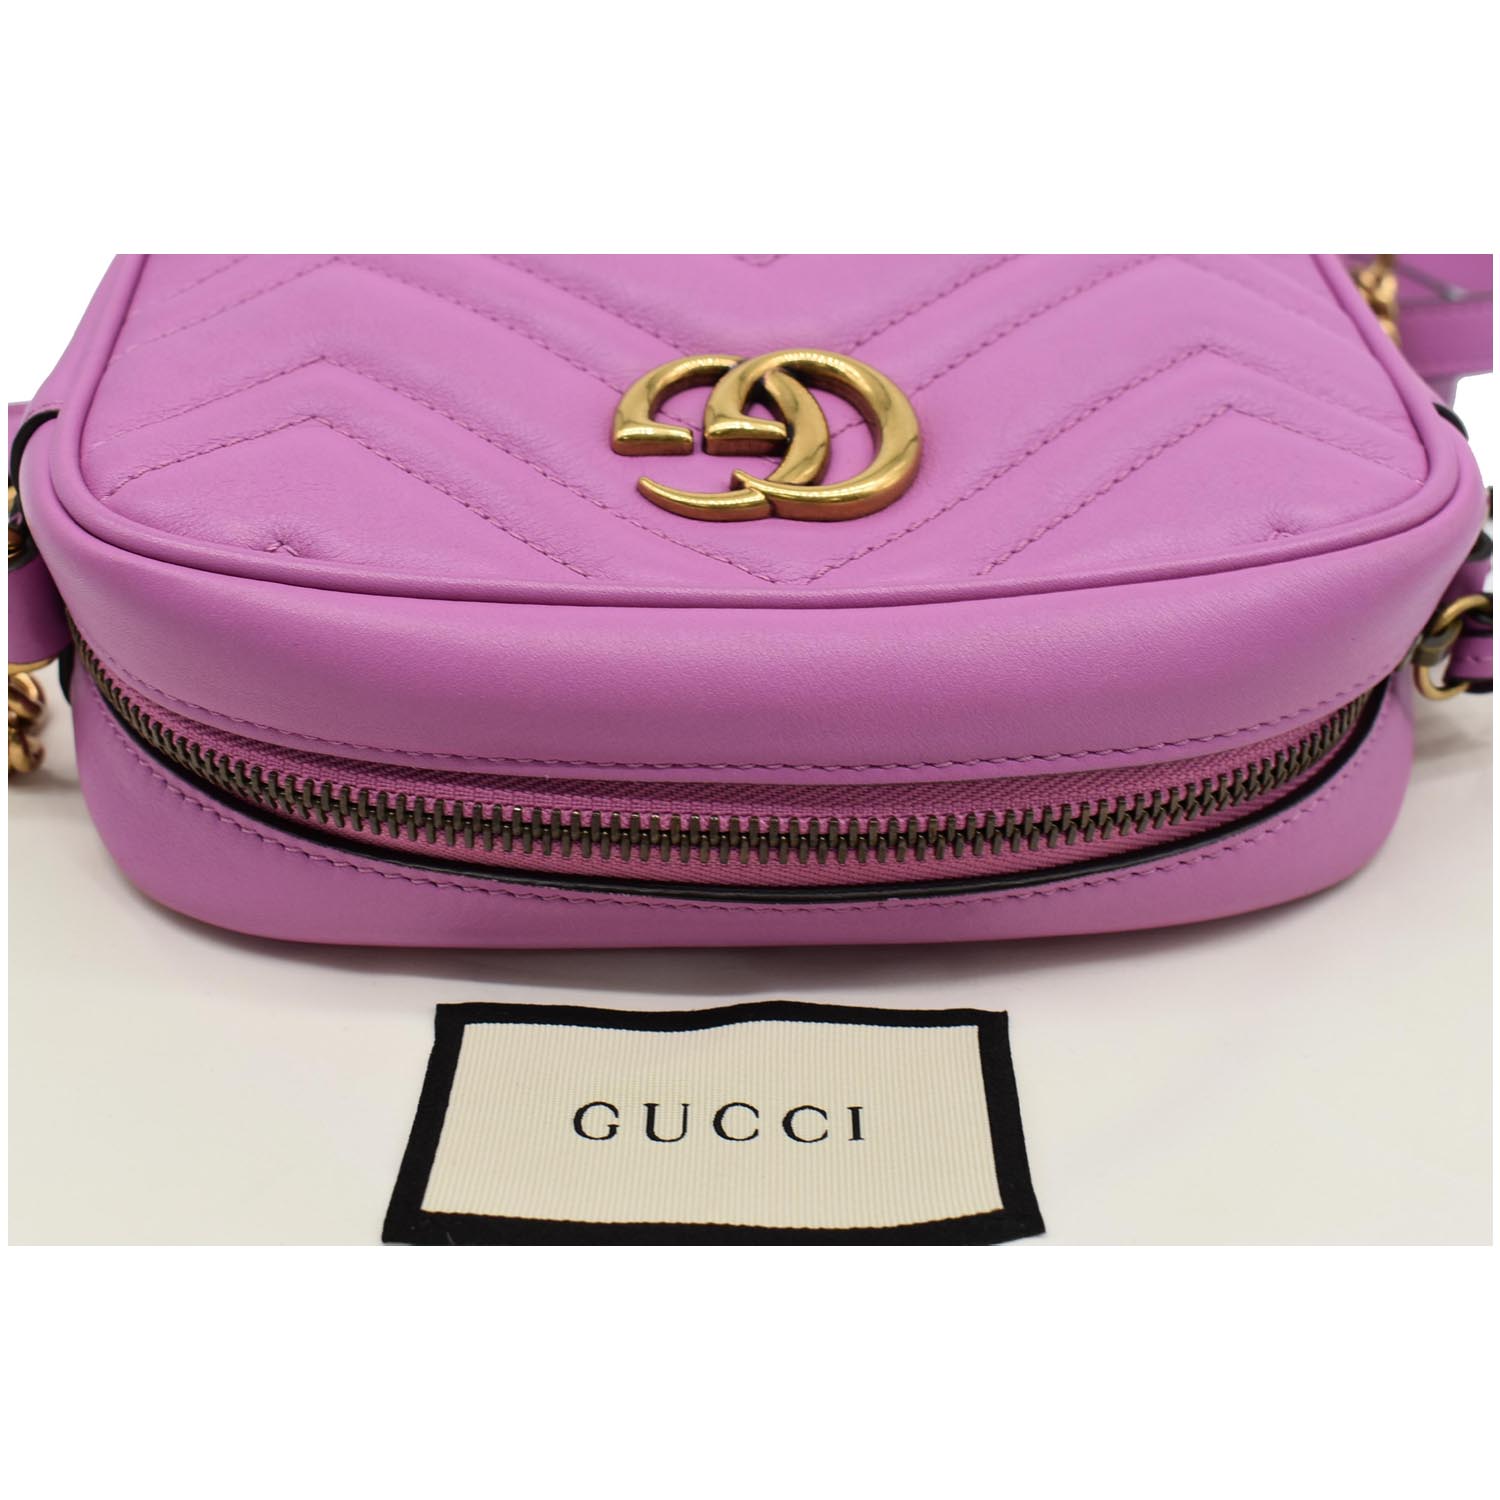 Gucci Cross-body Bag in Purple